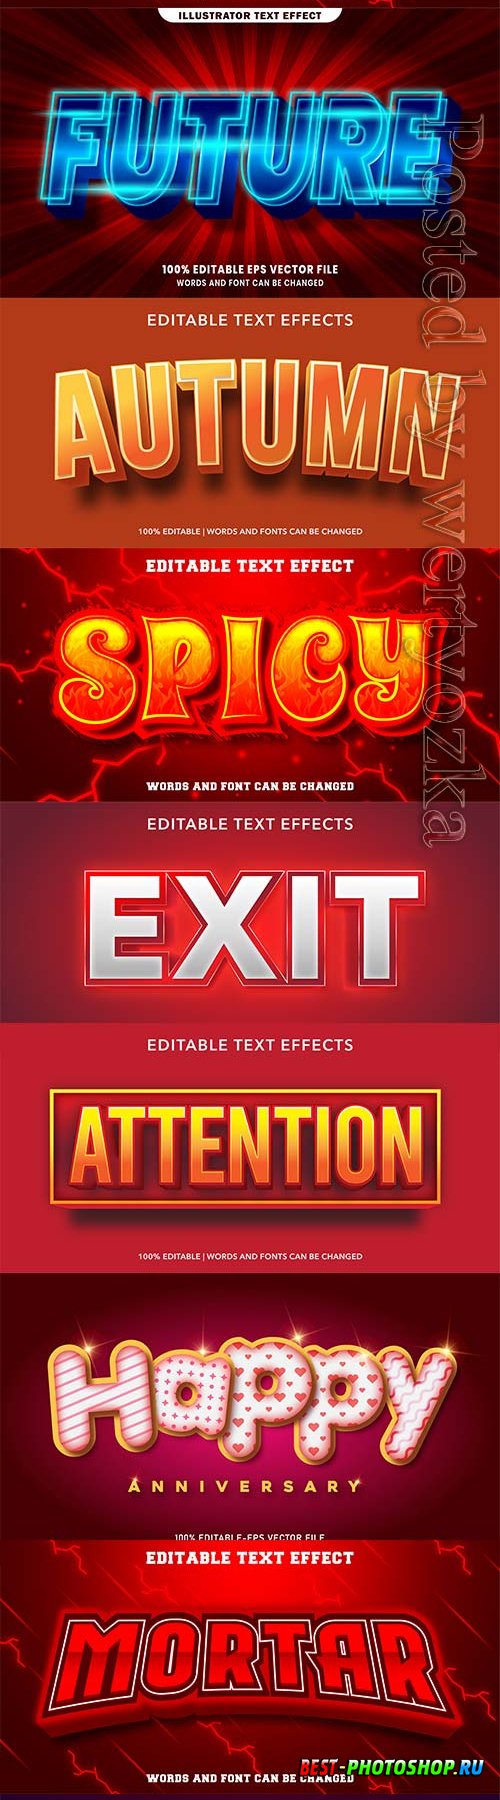 3d editable text style effect vector vol 246